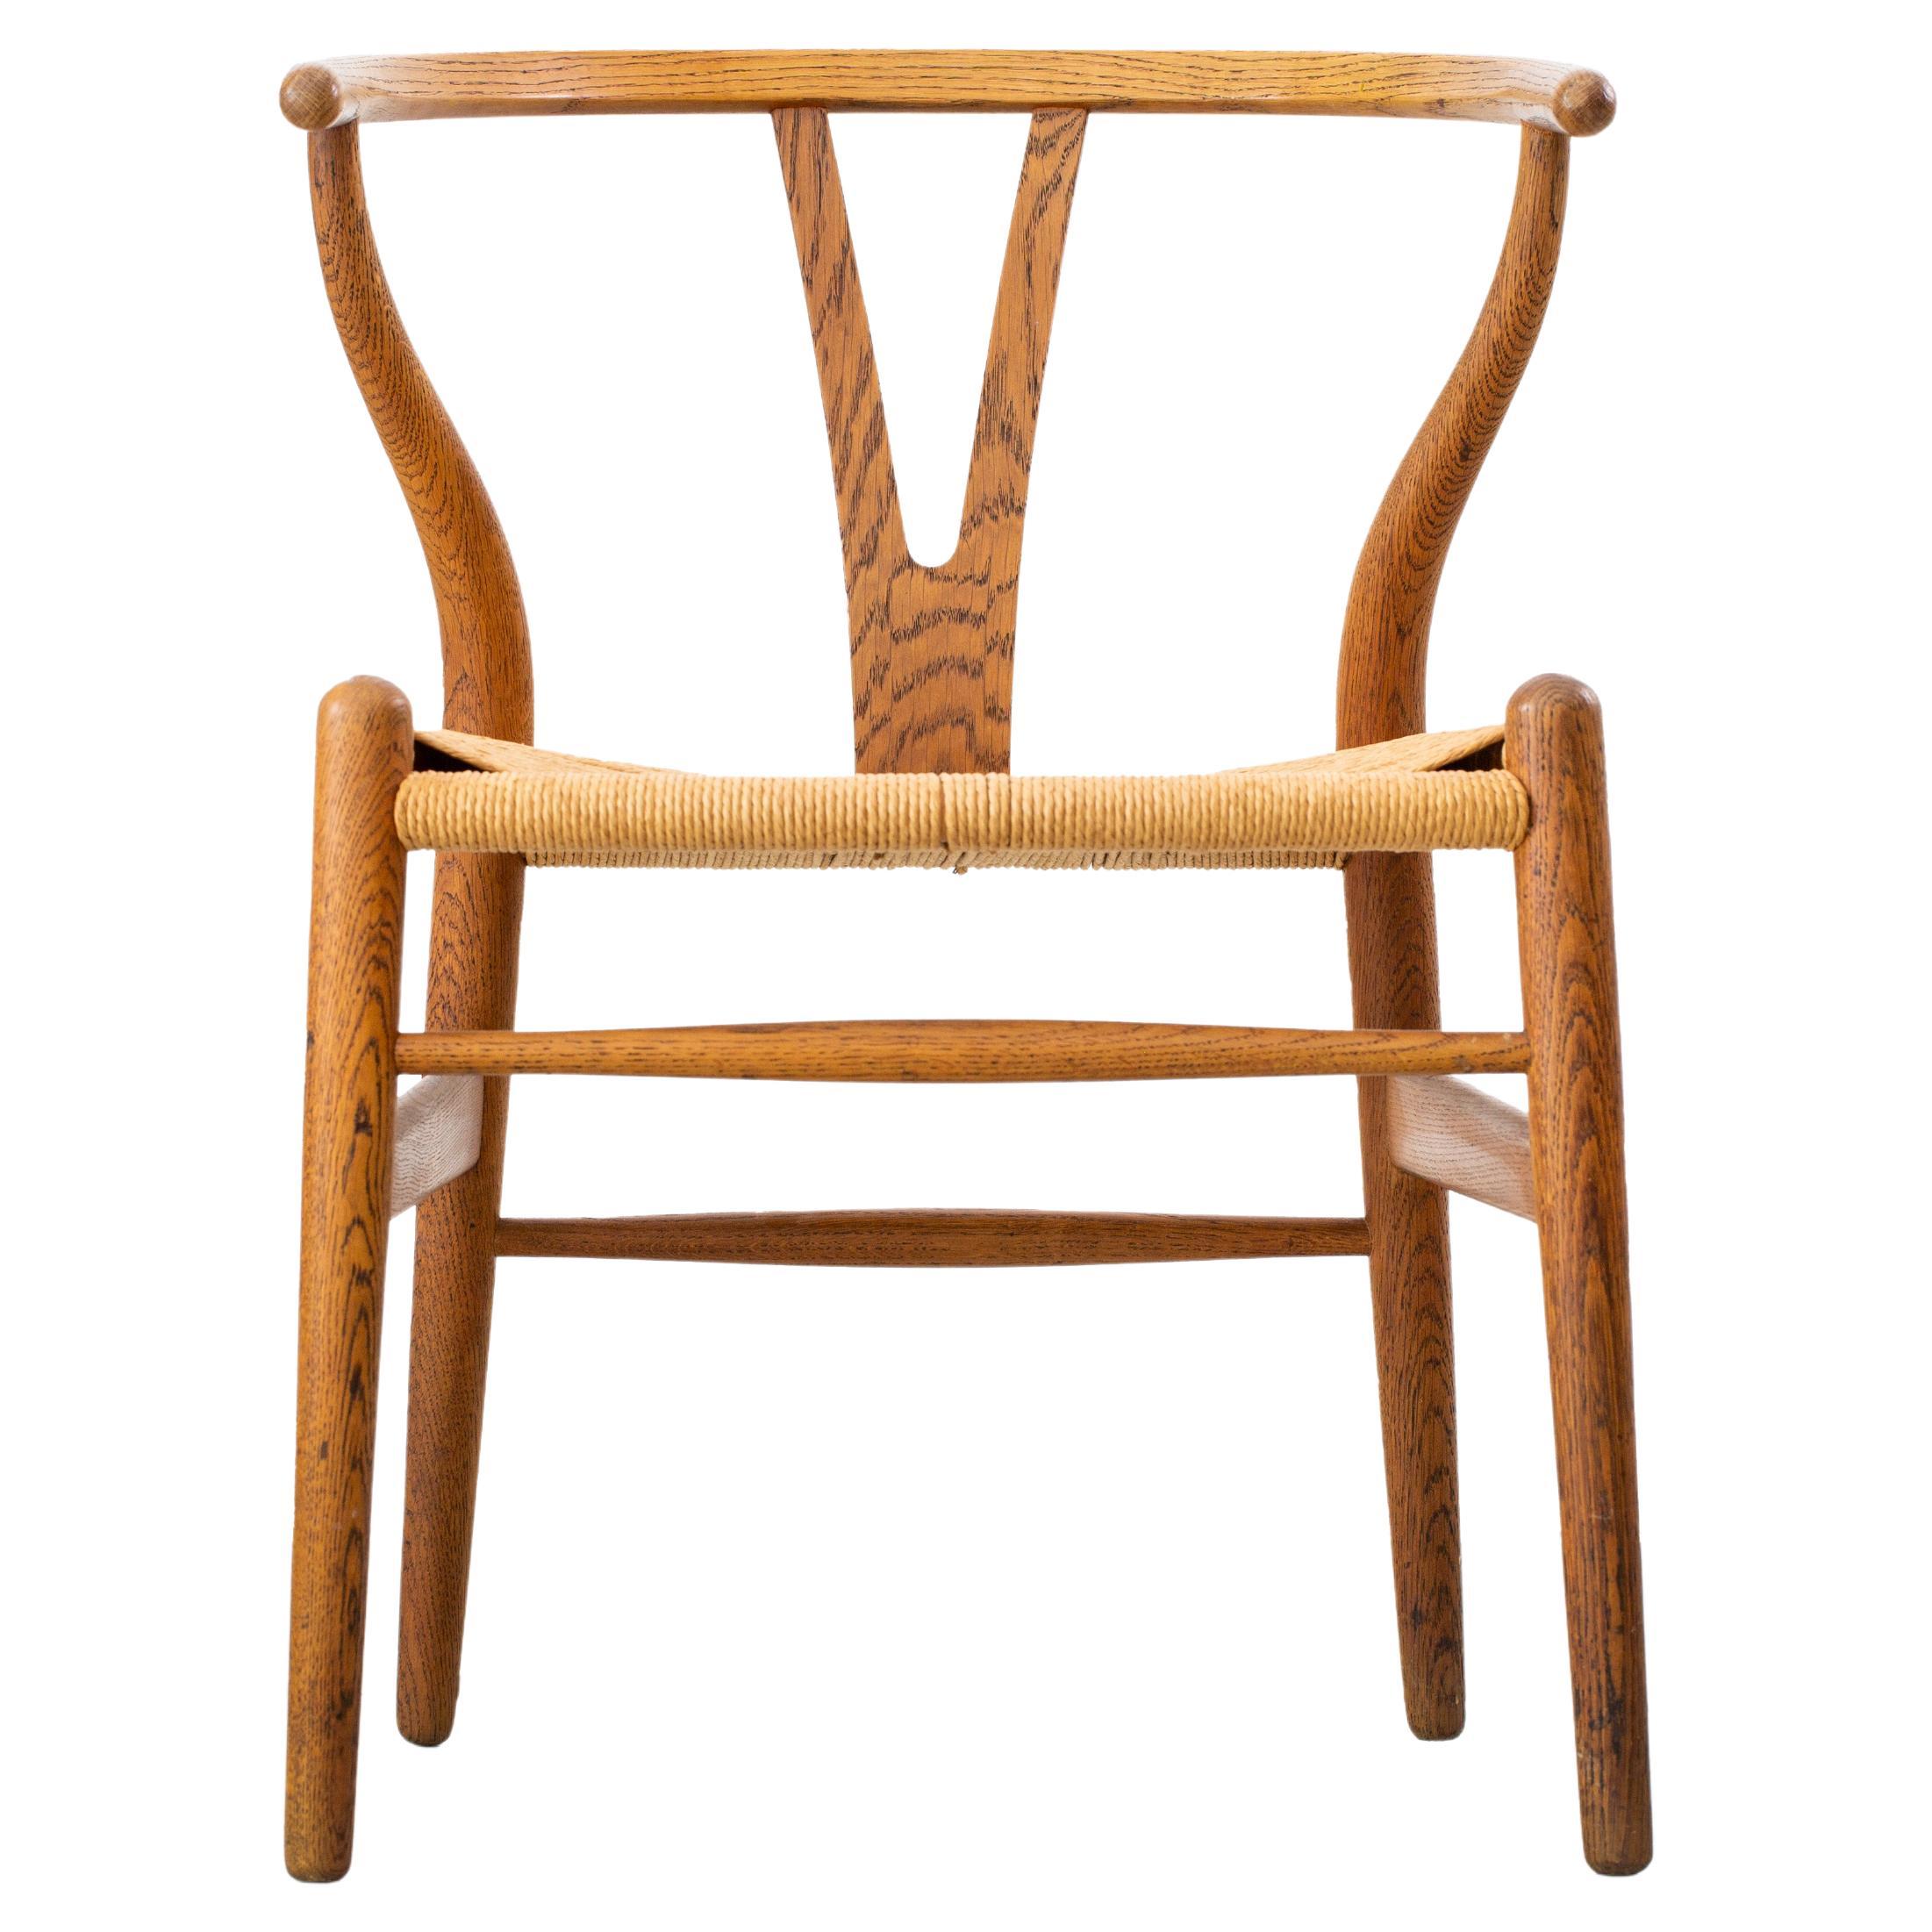 Hans Wegner CH24 Wishbone chair in oak and papercord circa 1959 Illums Bolighus